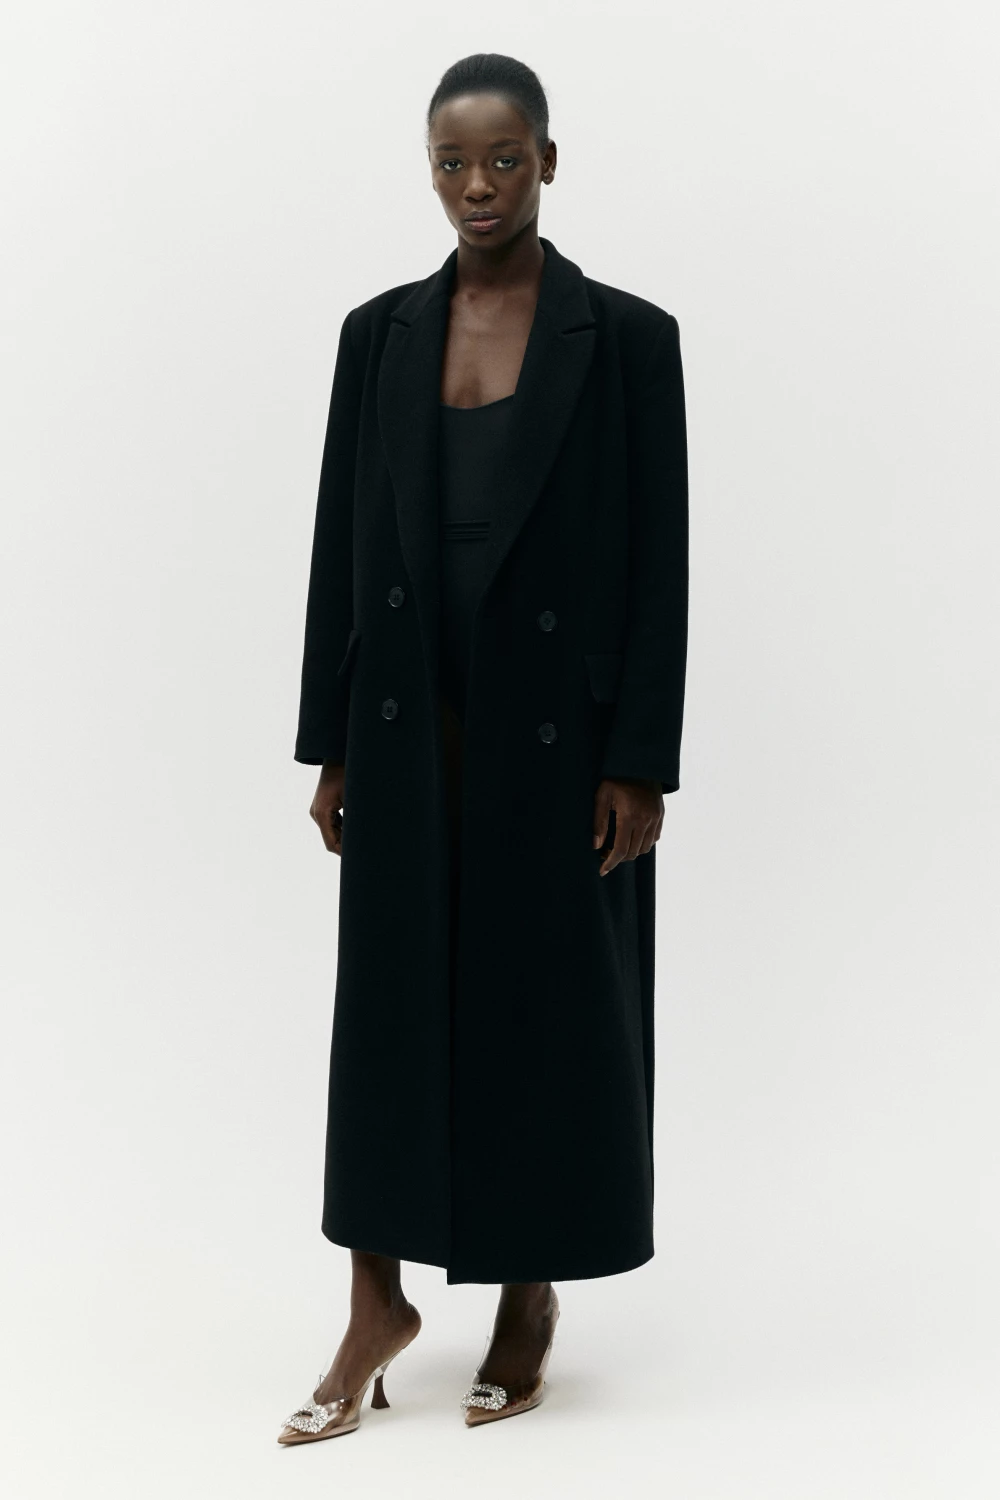 long coat in black color